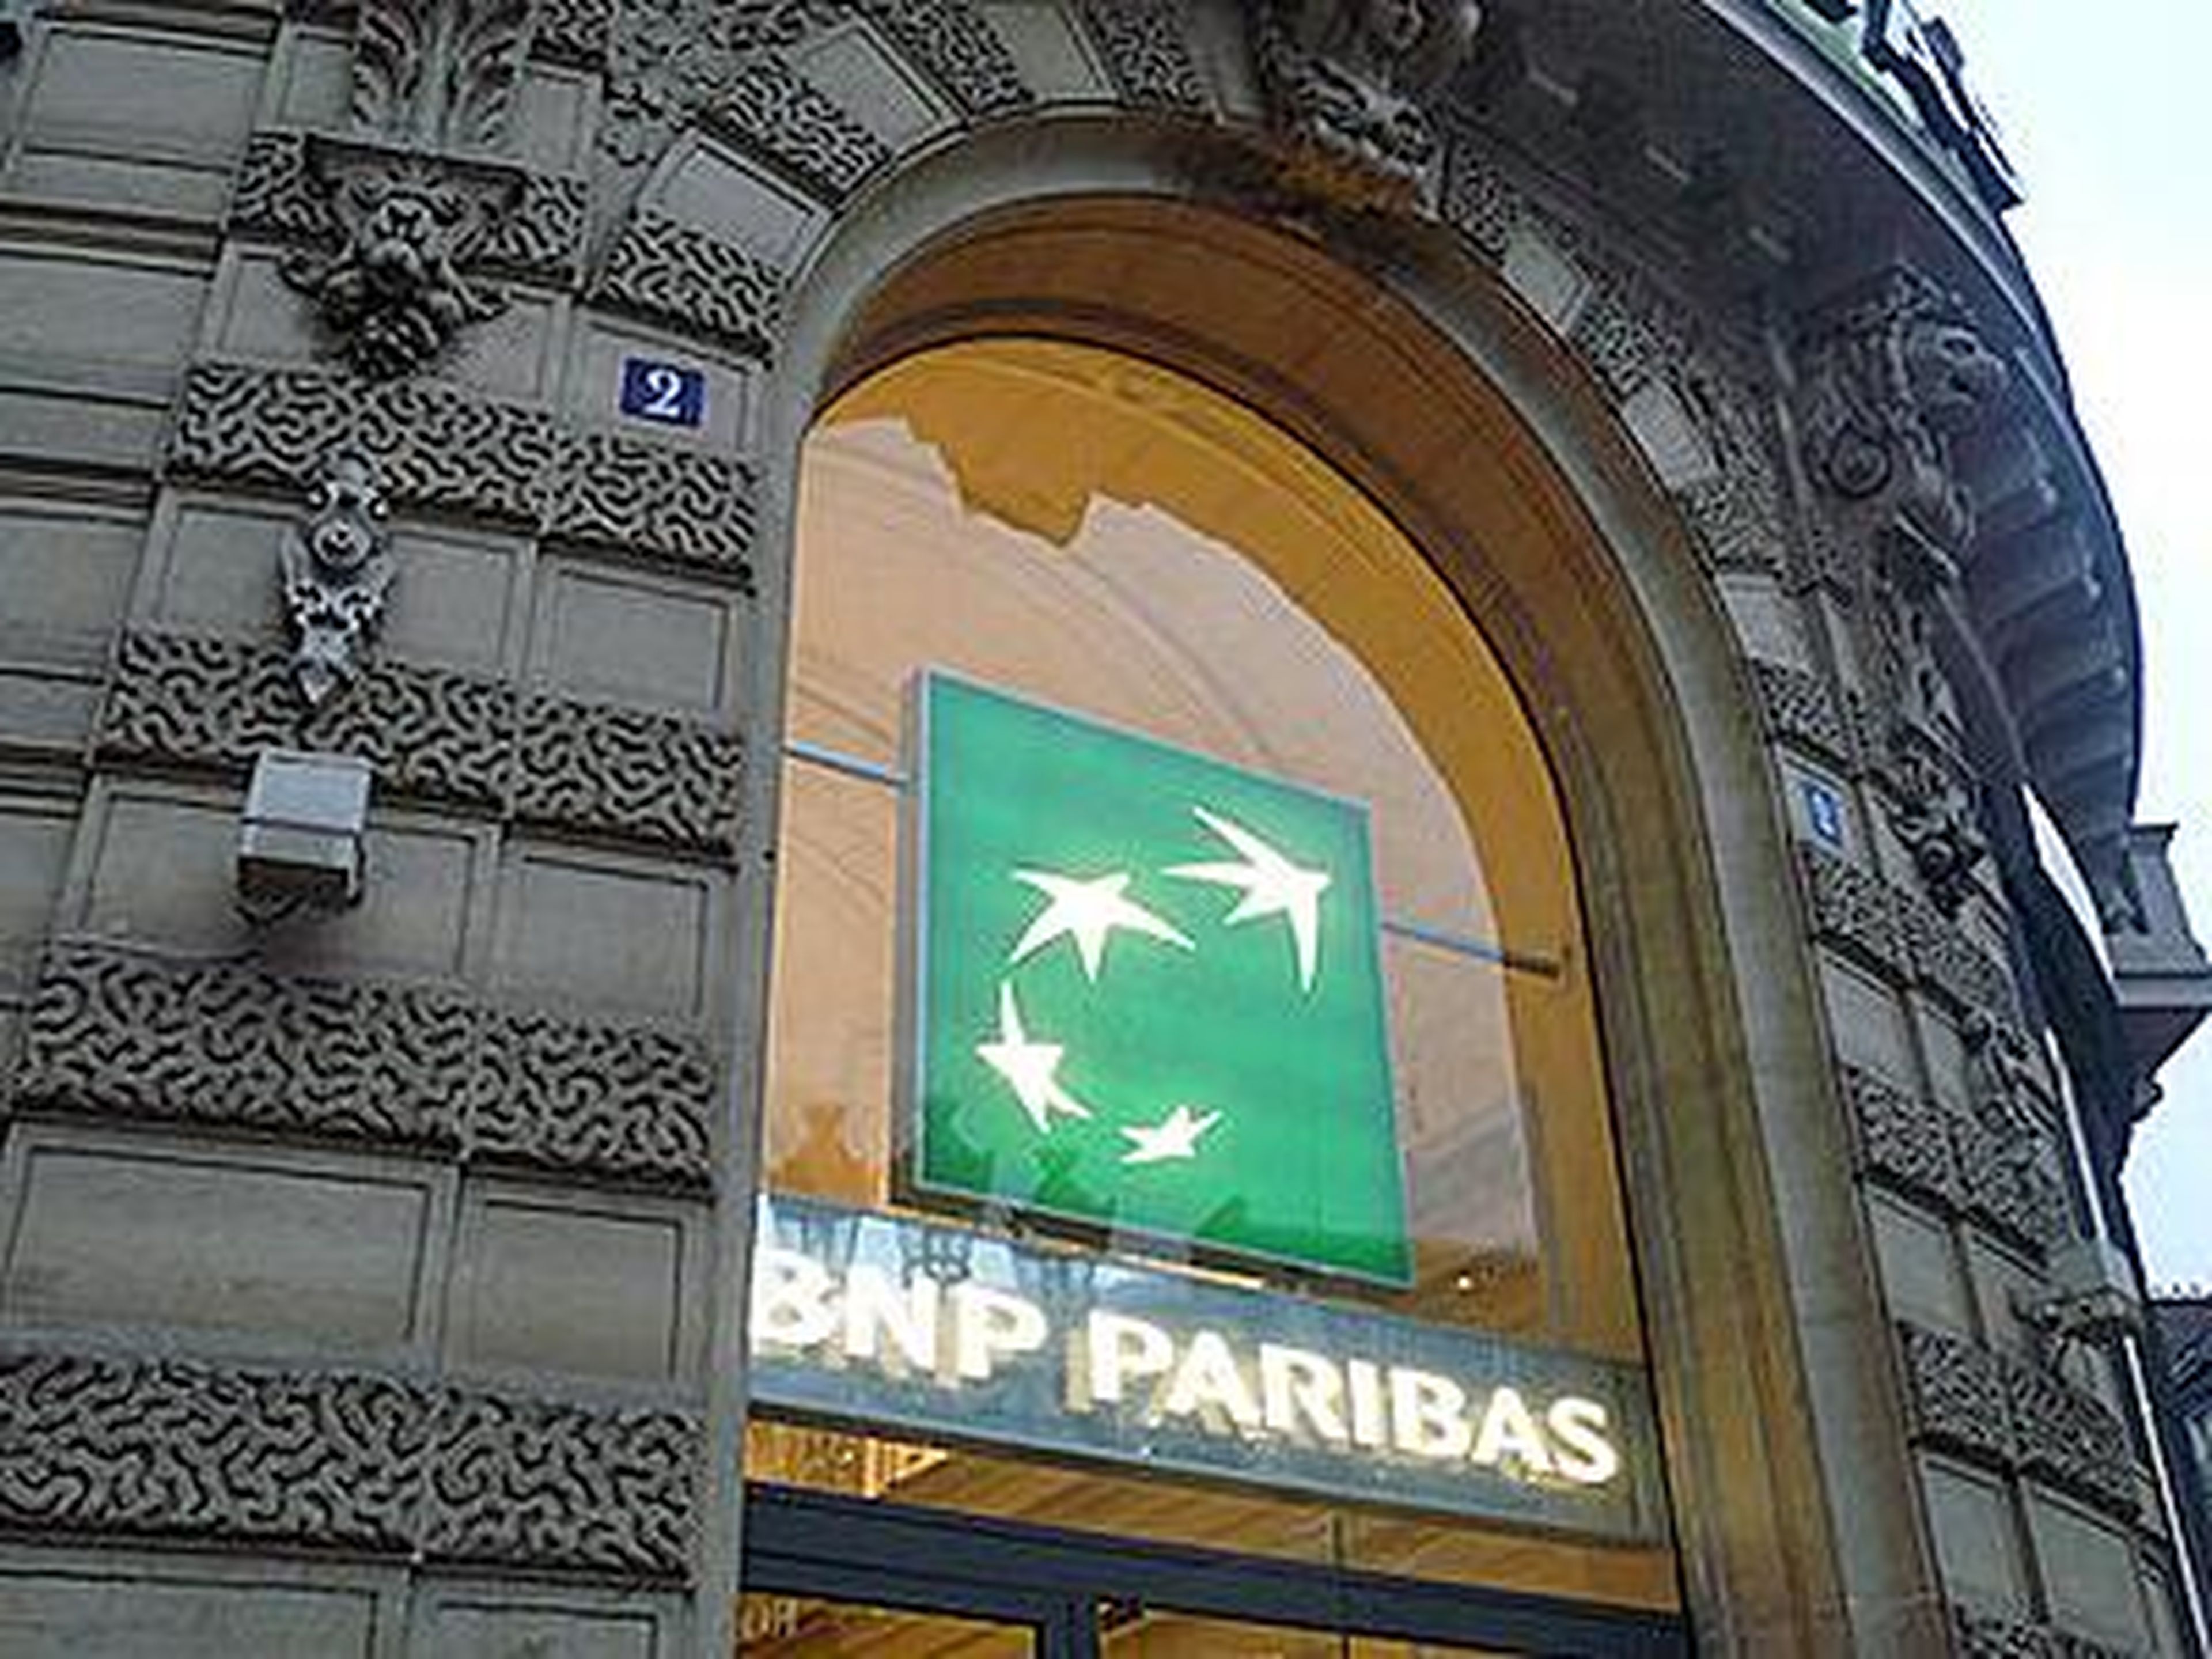 5. BNP Paribas (Assets $2271.8 billion)